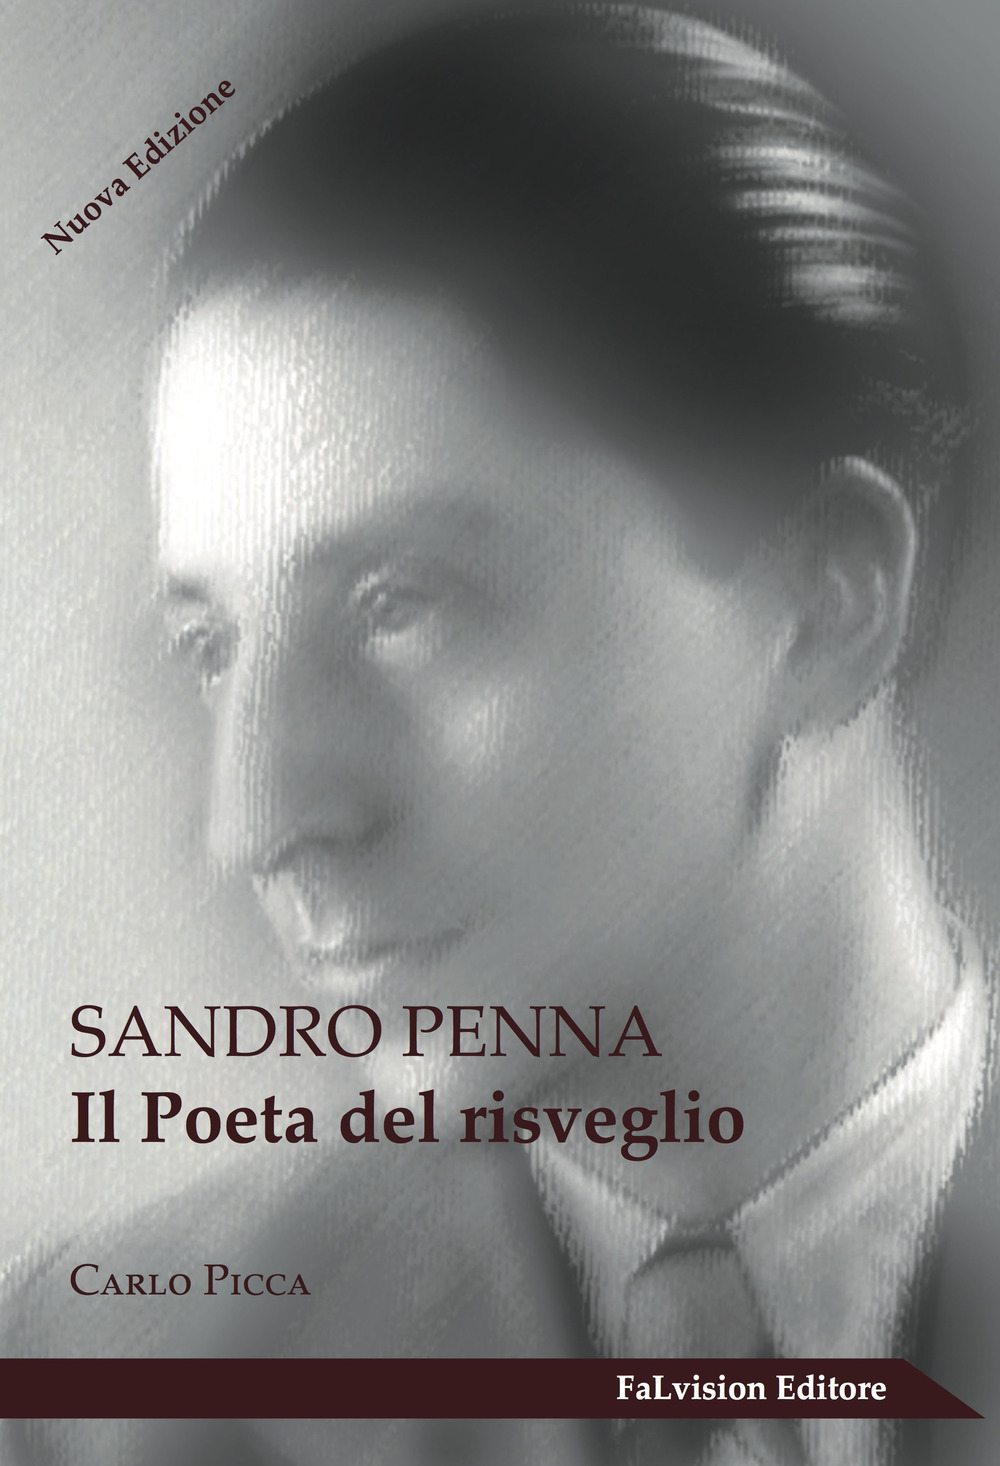 Sandro Penna. Il poeta del risveglio